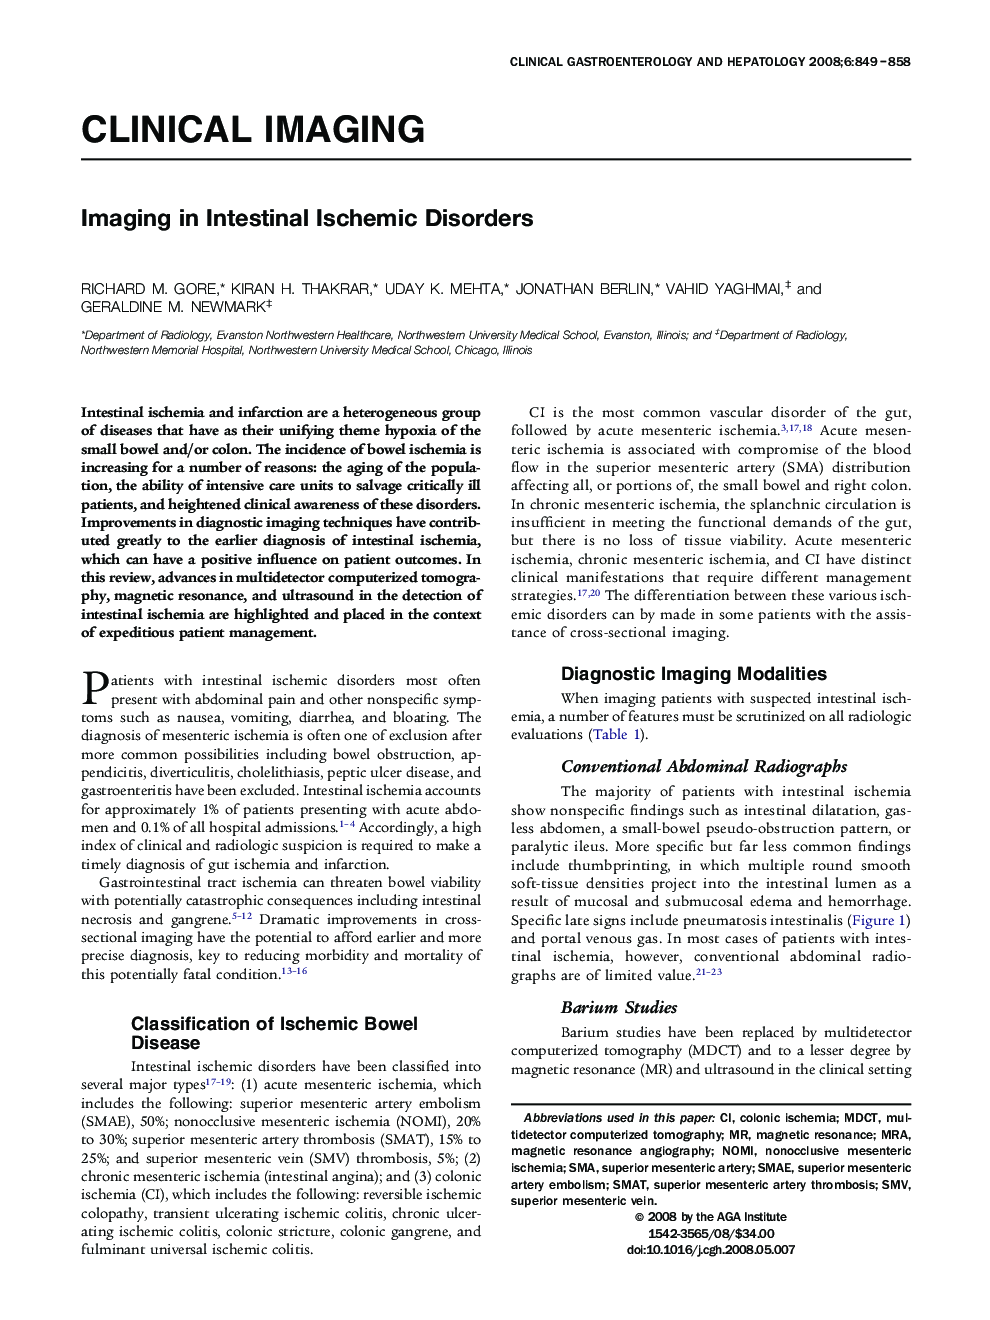 Imaging in Intestinal Ischemic Disorders